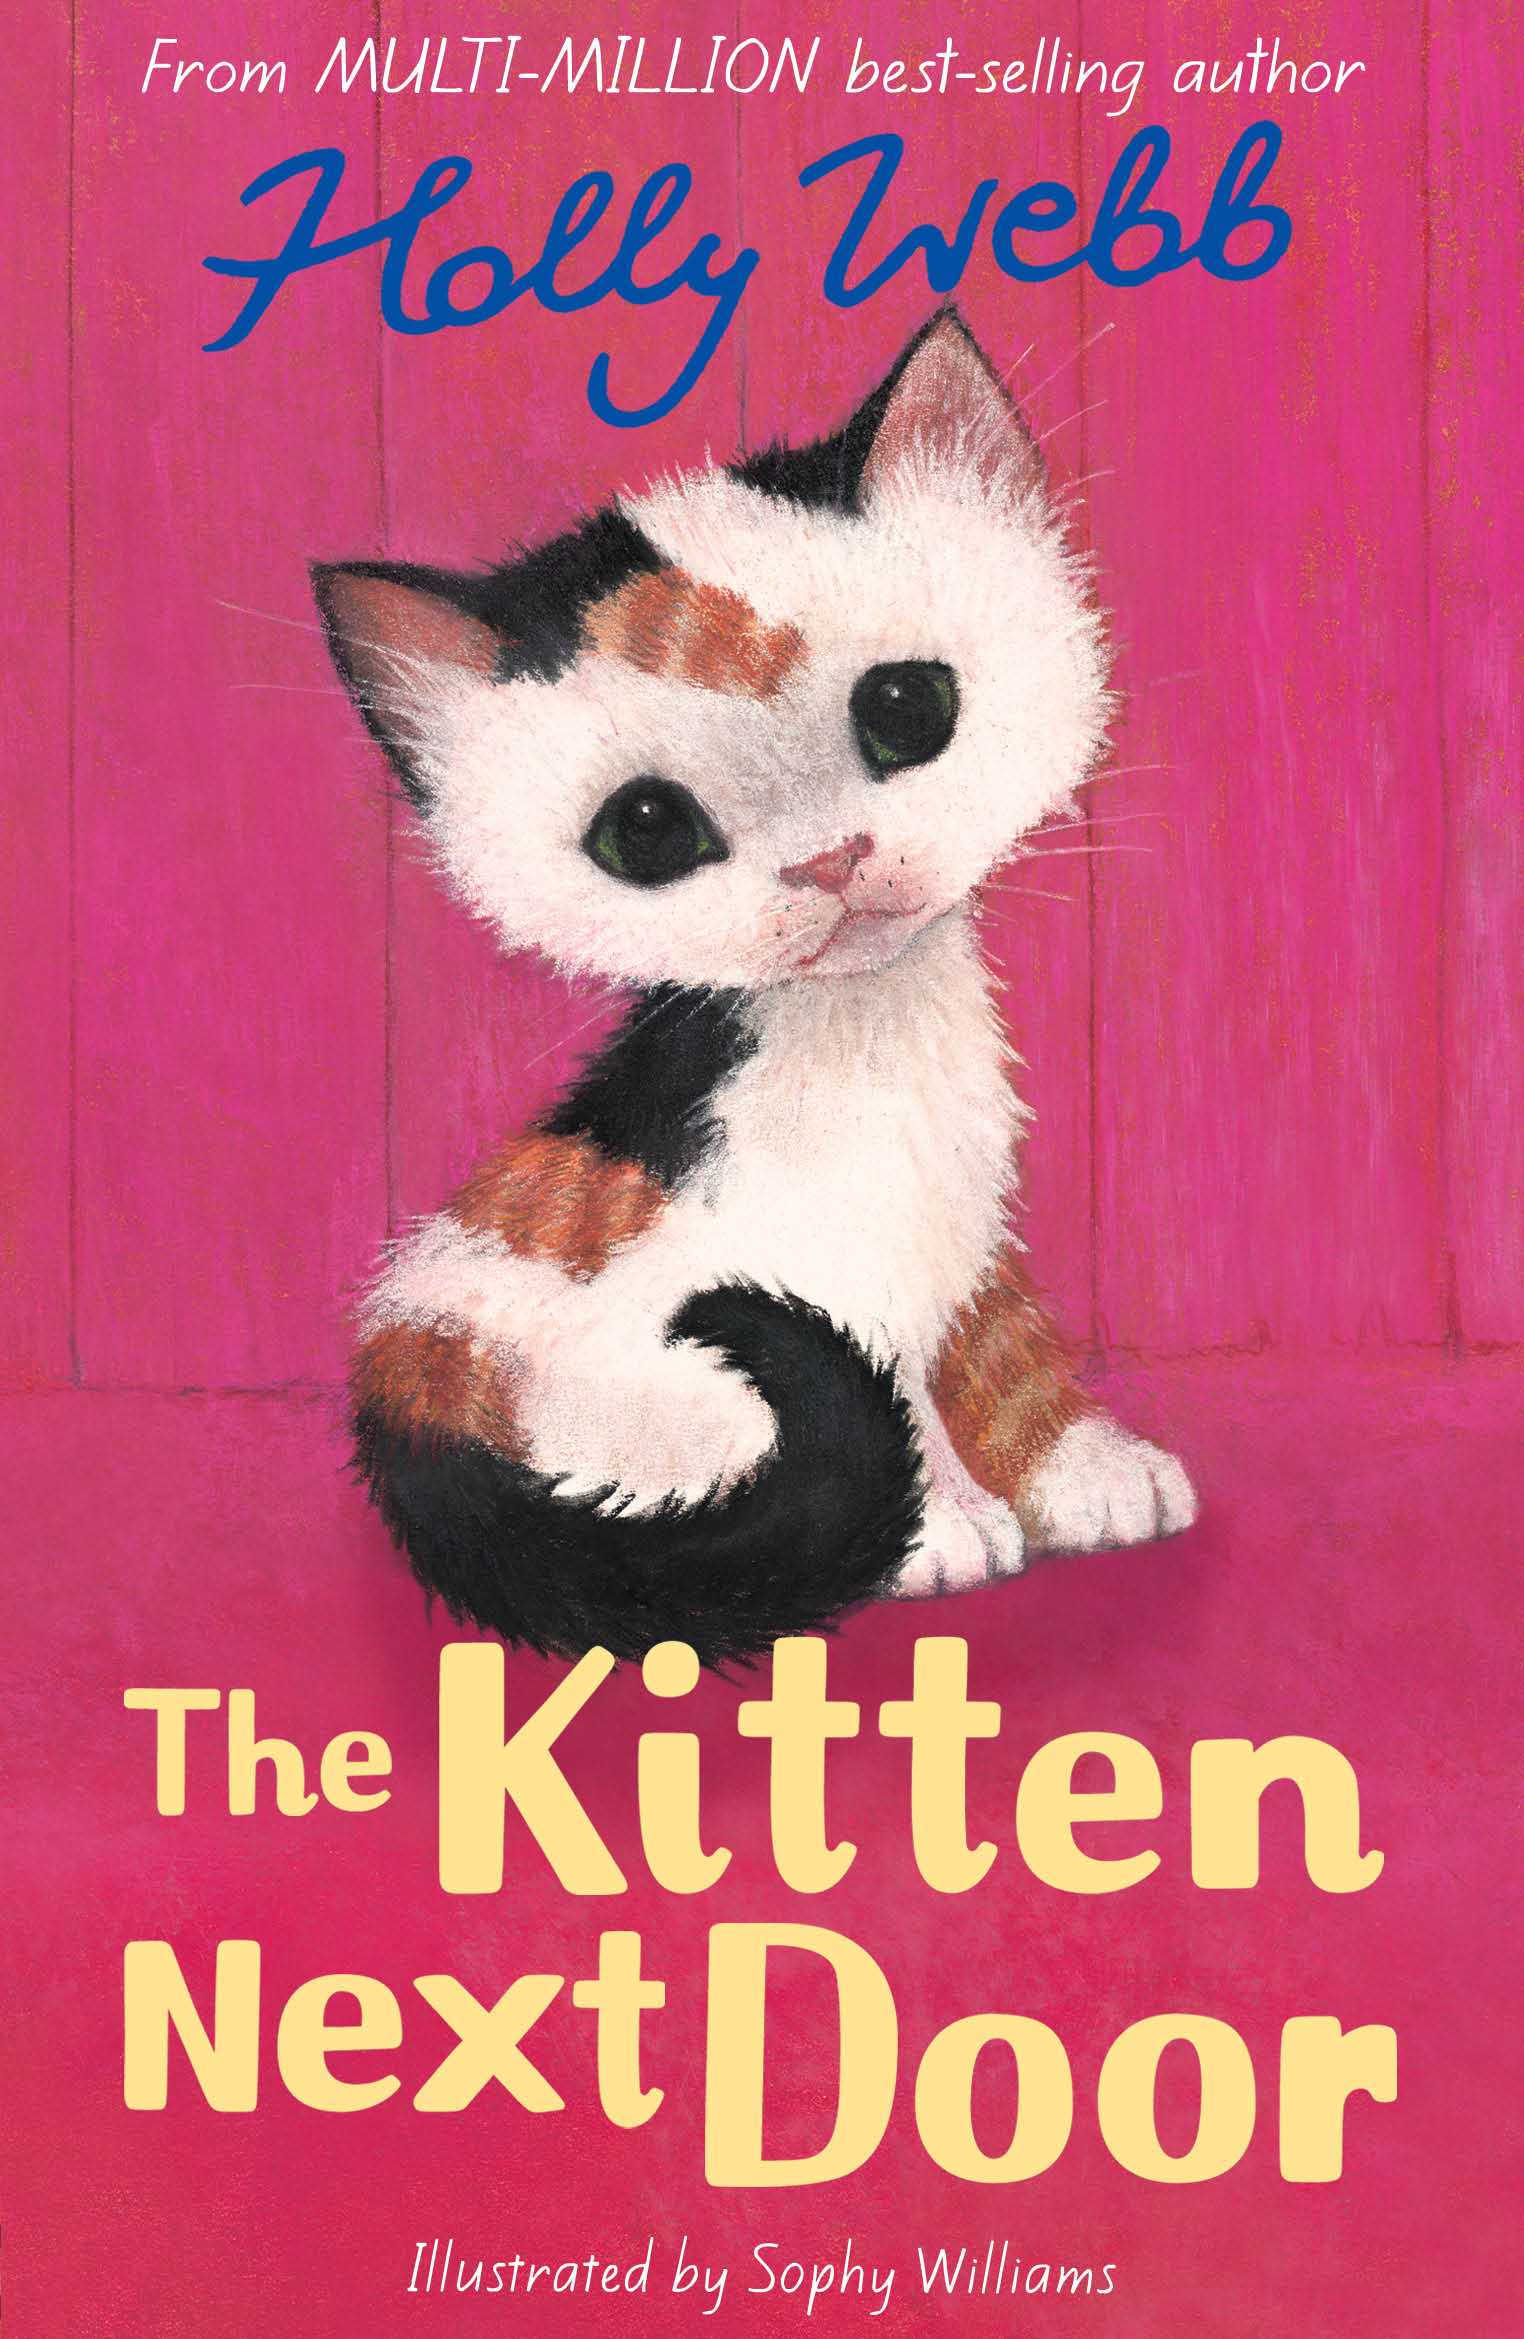 Holly Webb Animal Stories #47: The Kitten Next Door